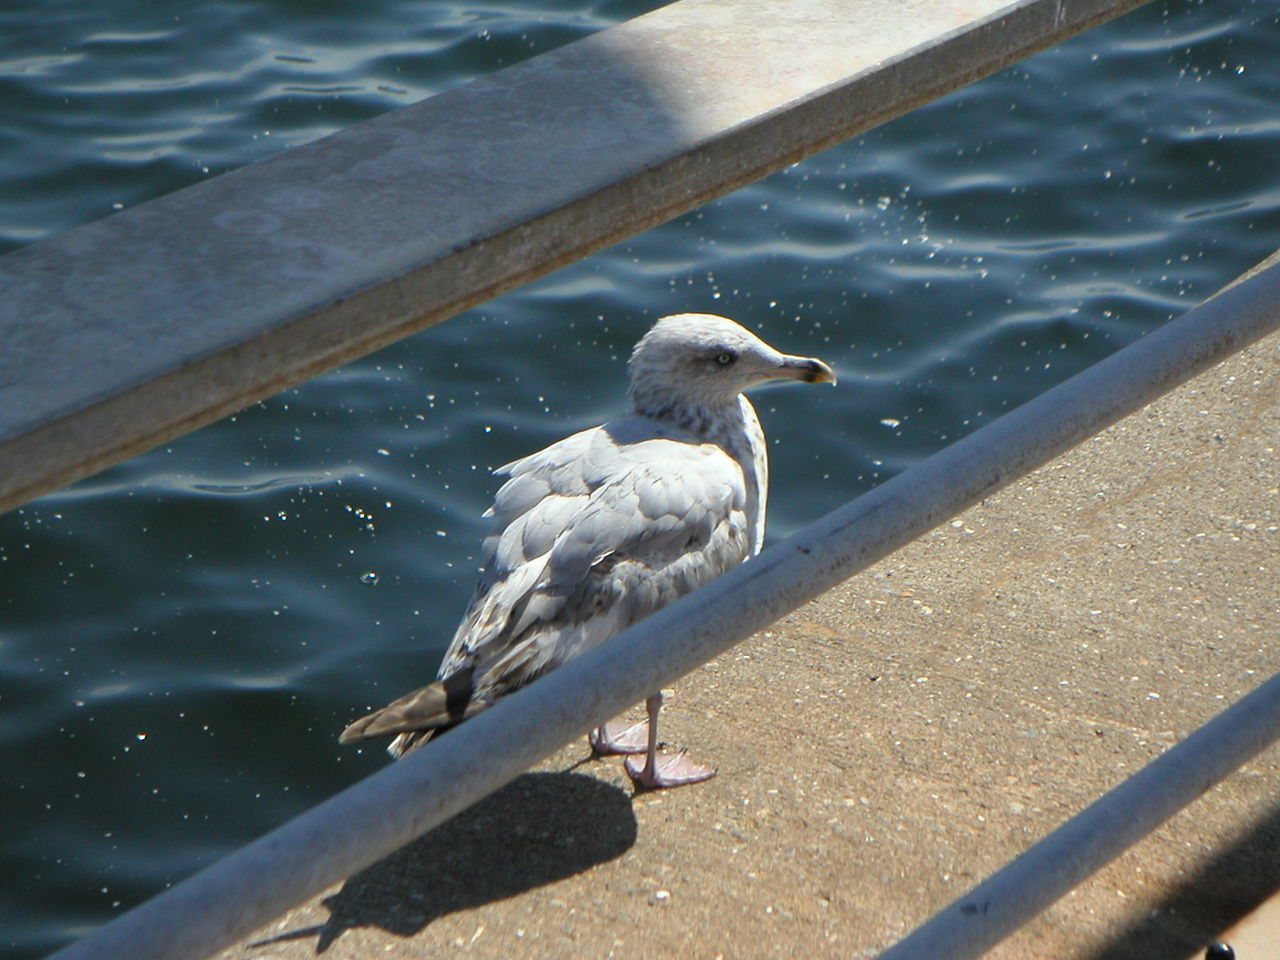 CLOSE-UP OF BIRD PERCHING ON LAKE